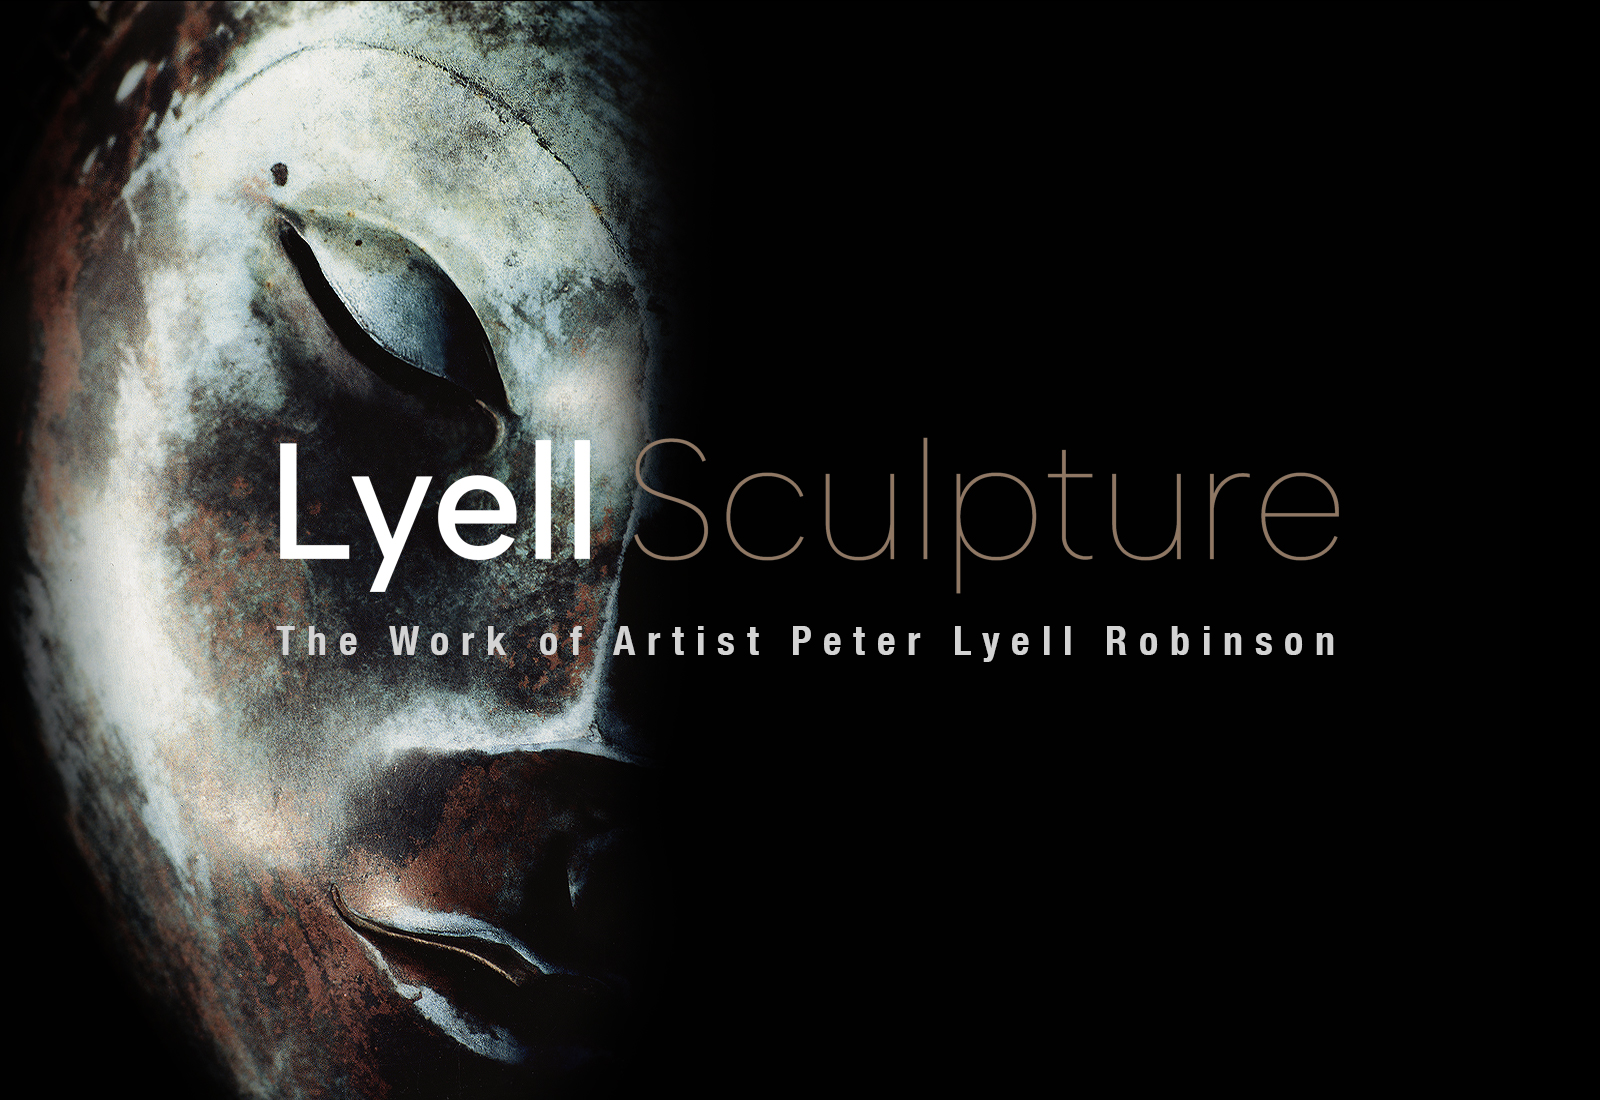 Peter Lyell Robinson Sculpture Sculptures Painting Paintings Art Artist